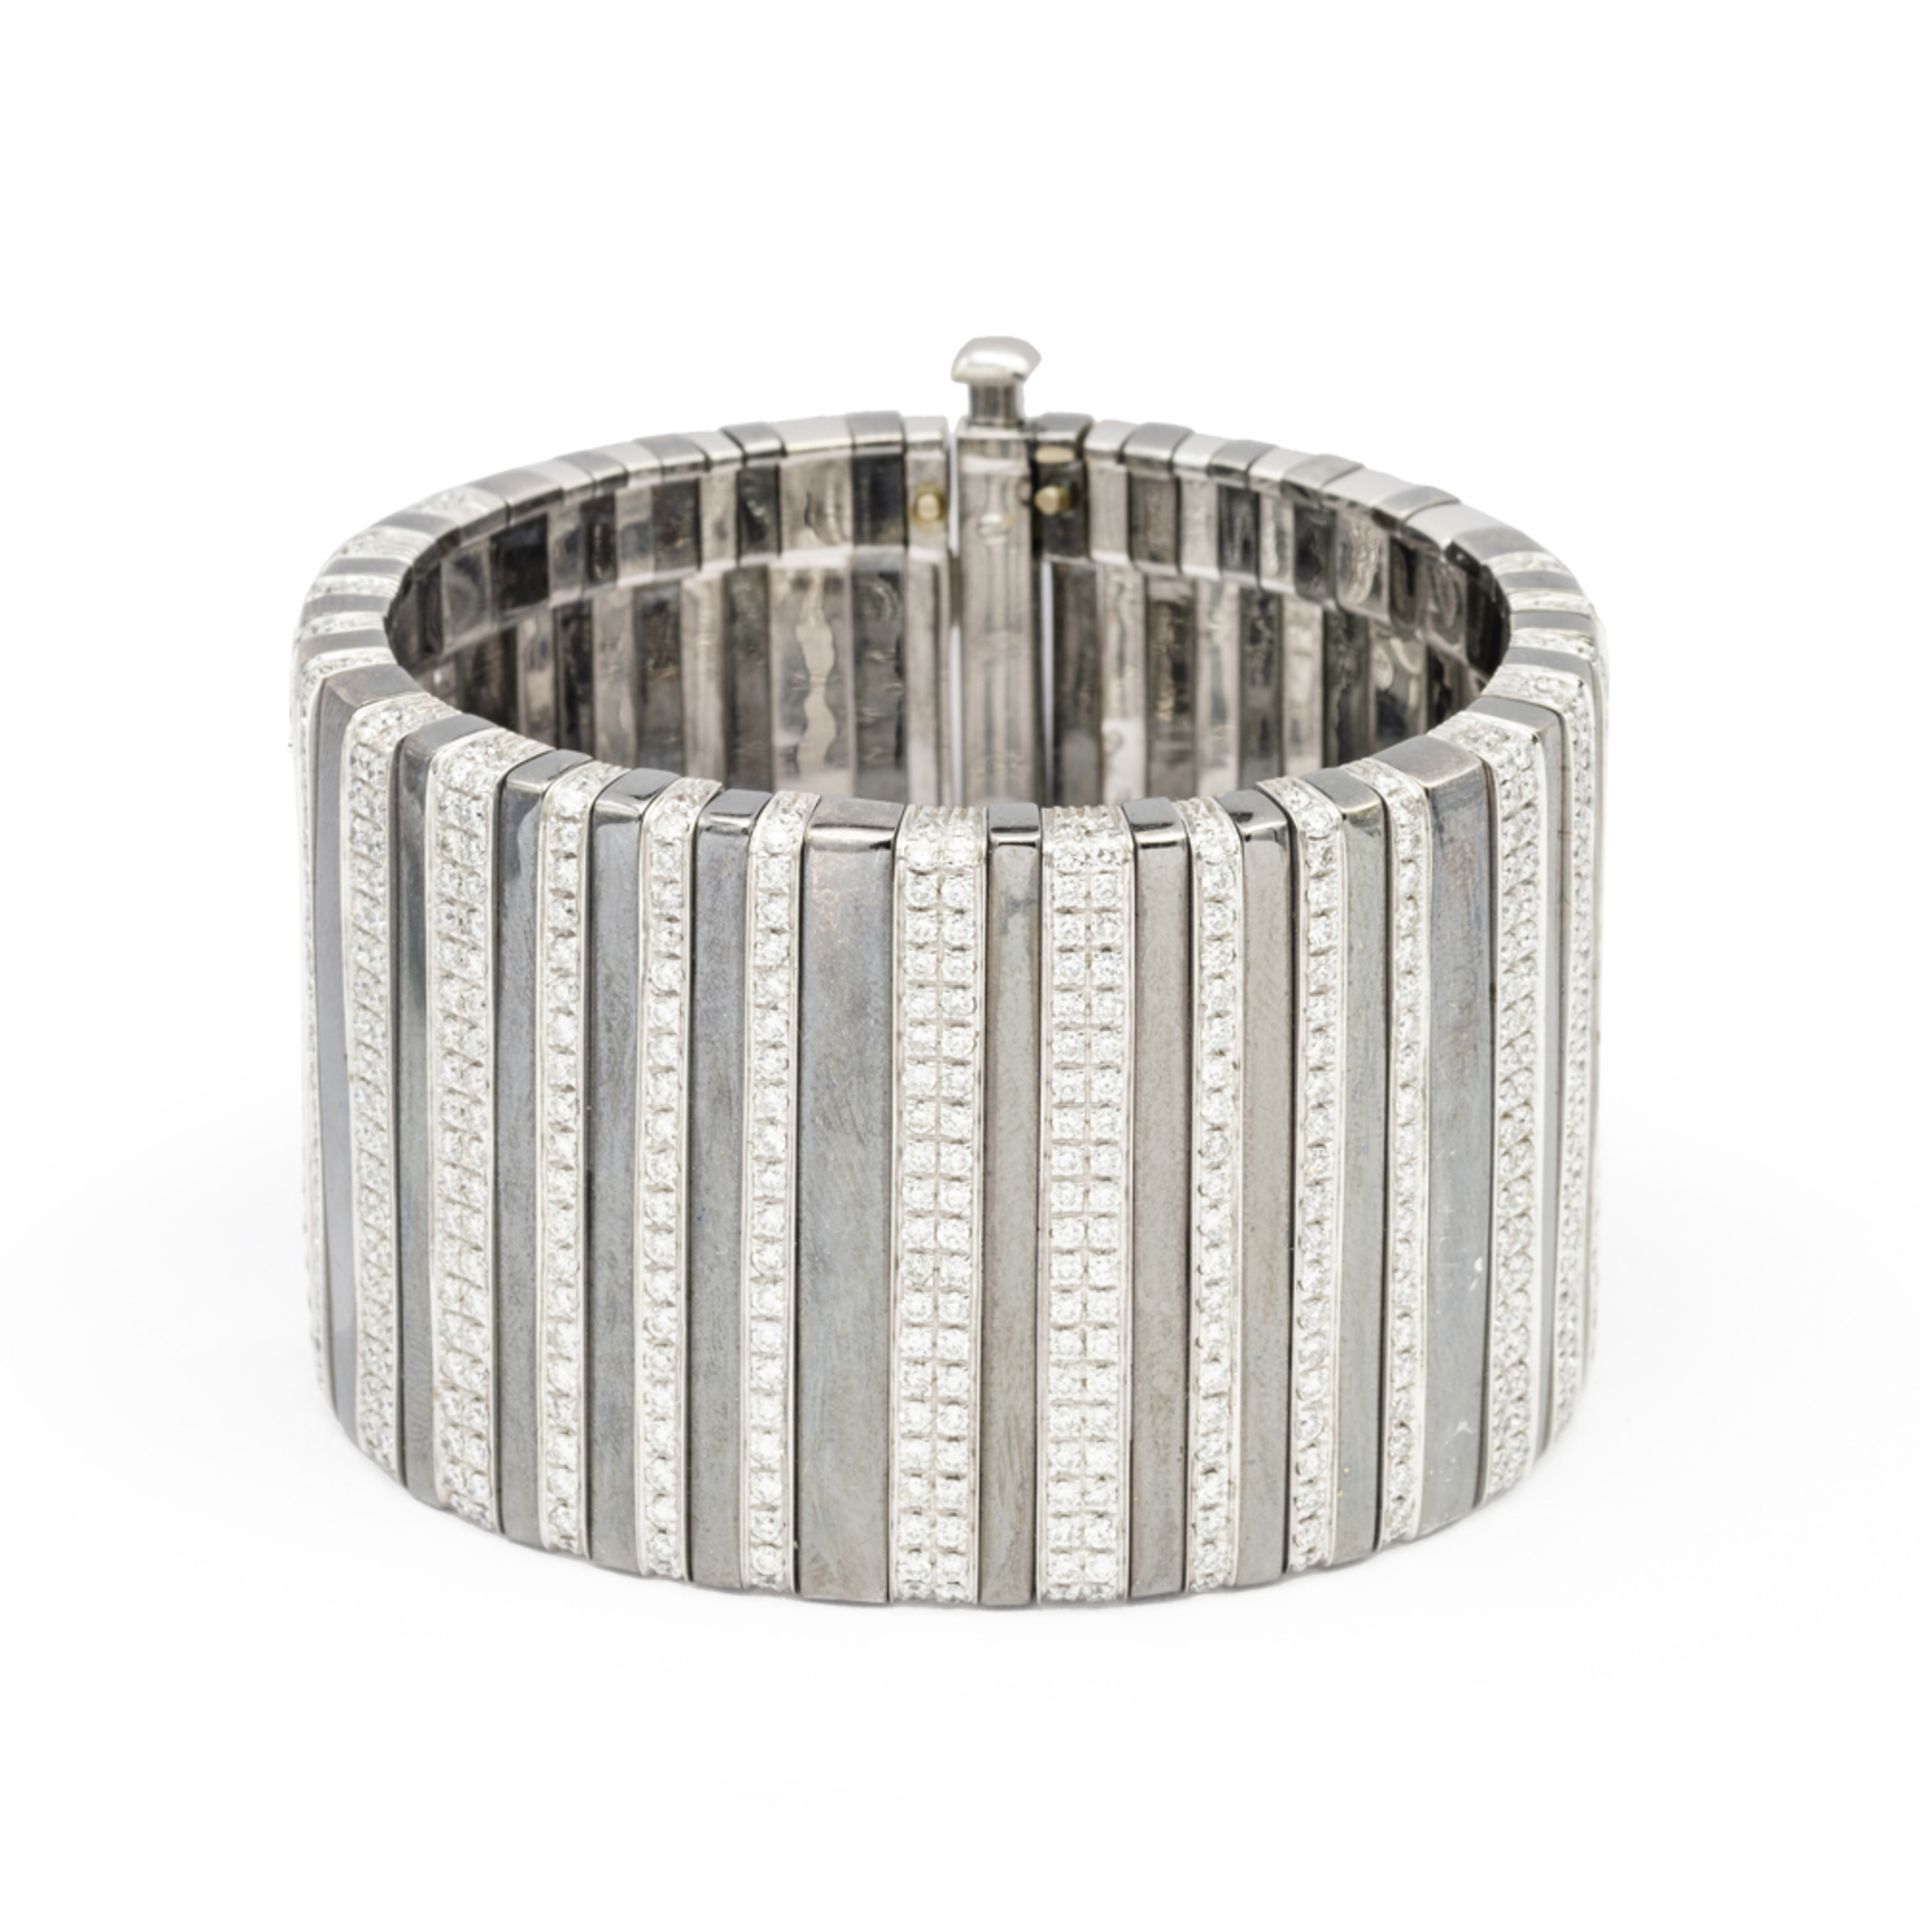 18kt white gold and diamond cuff bracelet